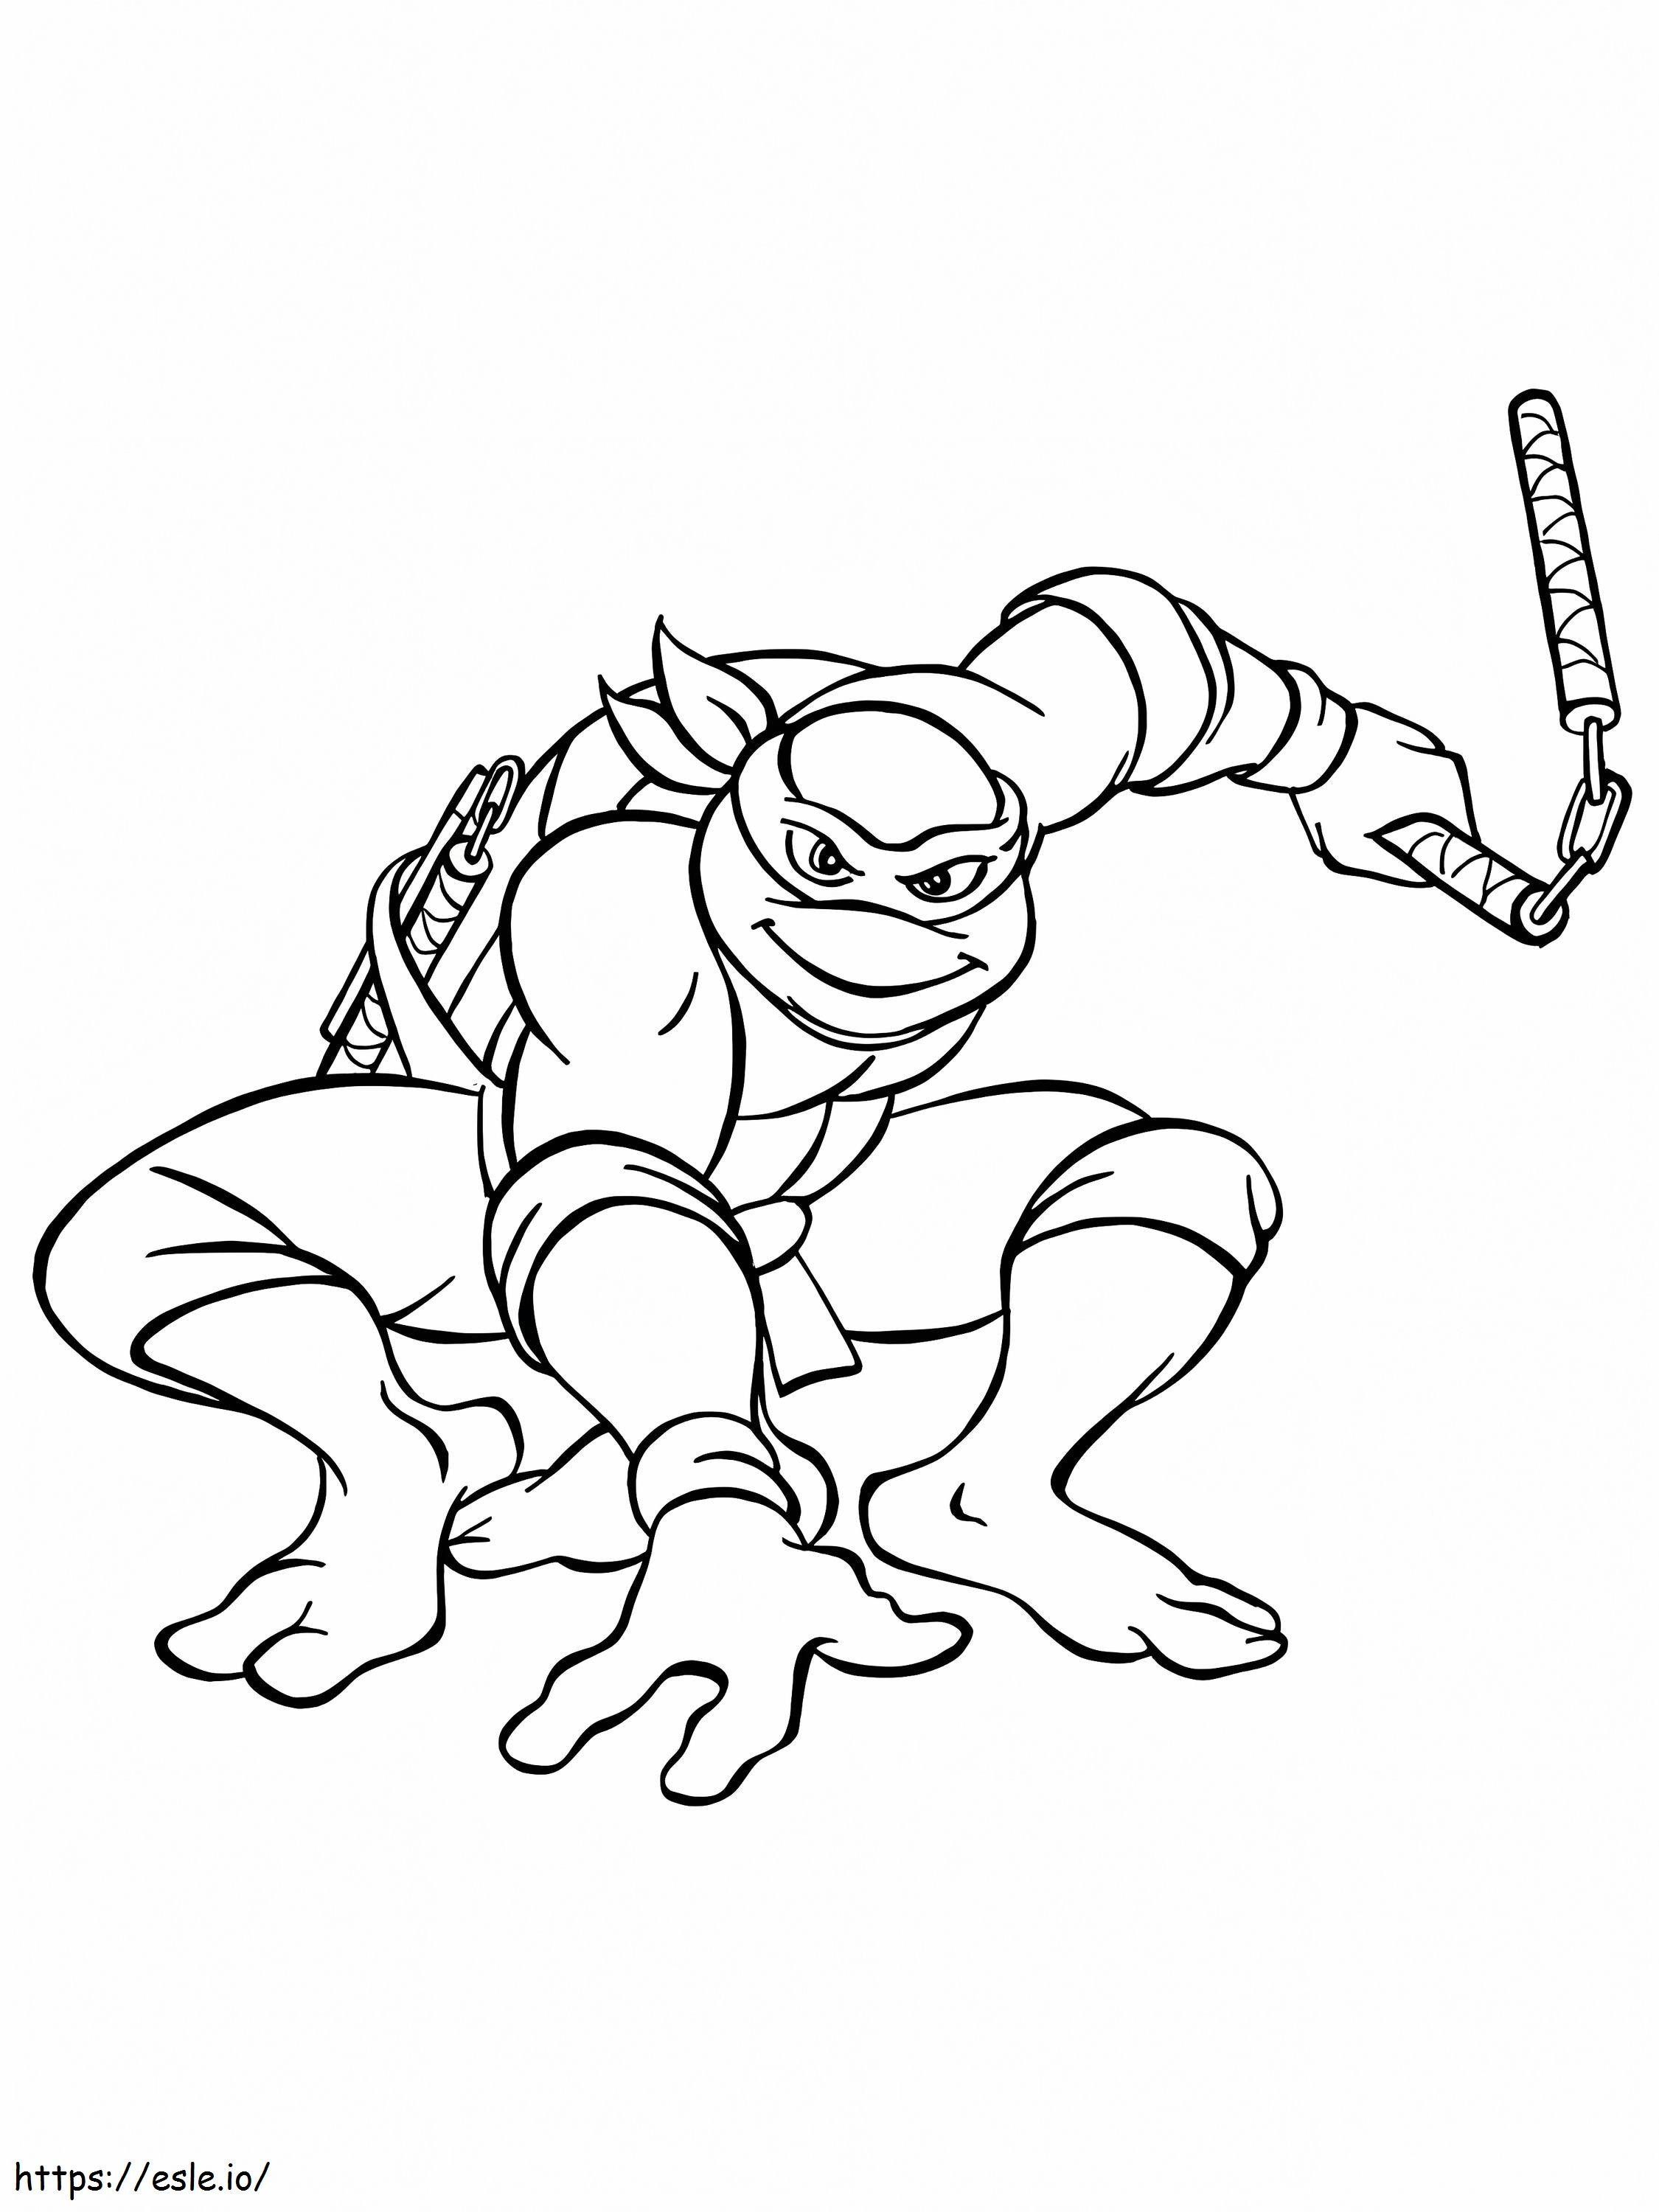 Tartaruga Ninja e Nunchaku para colorir